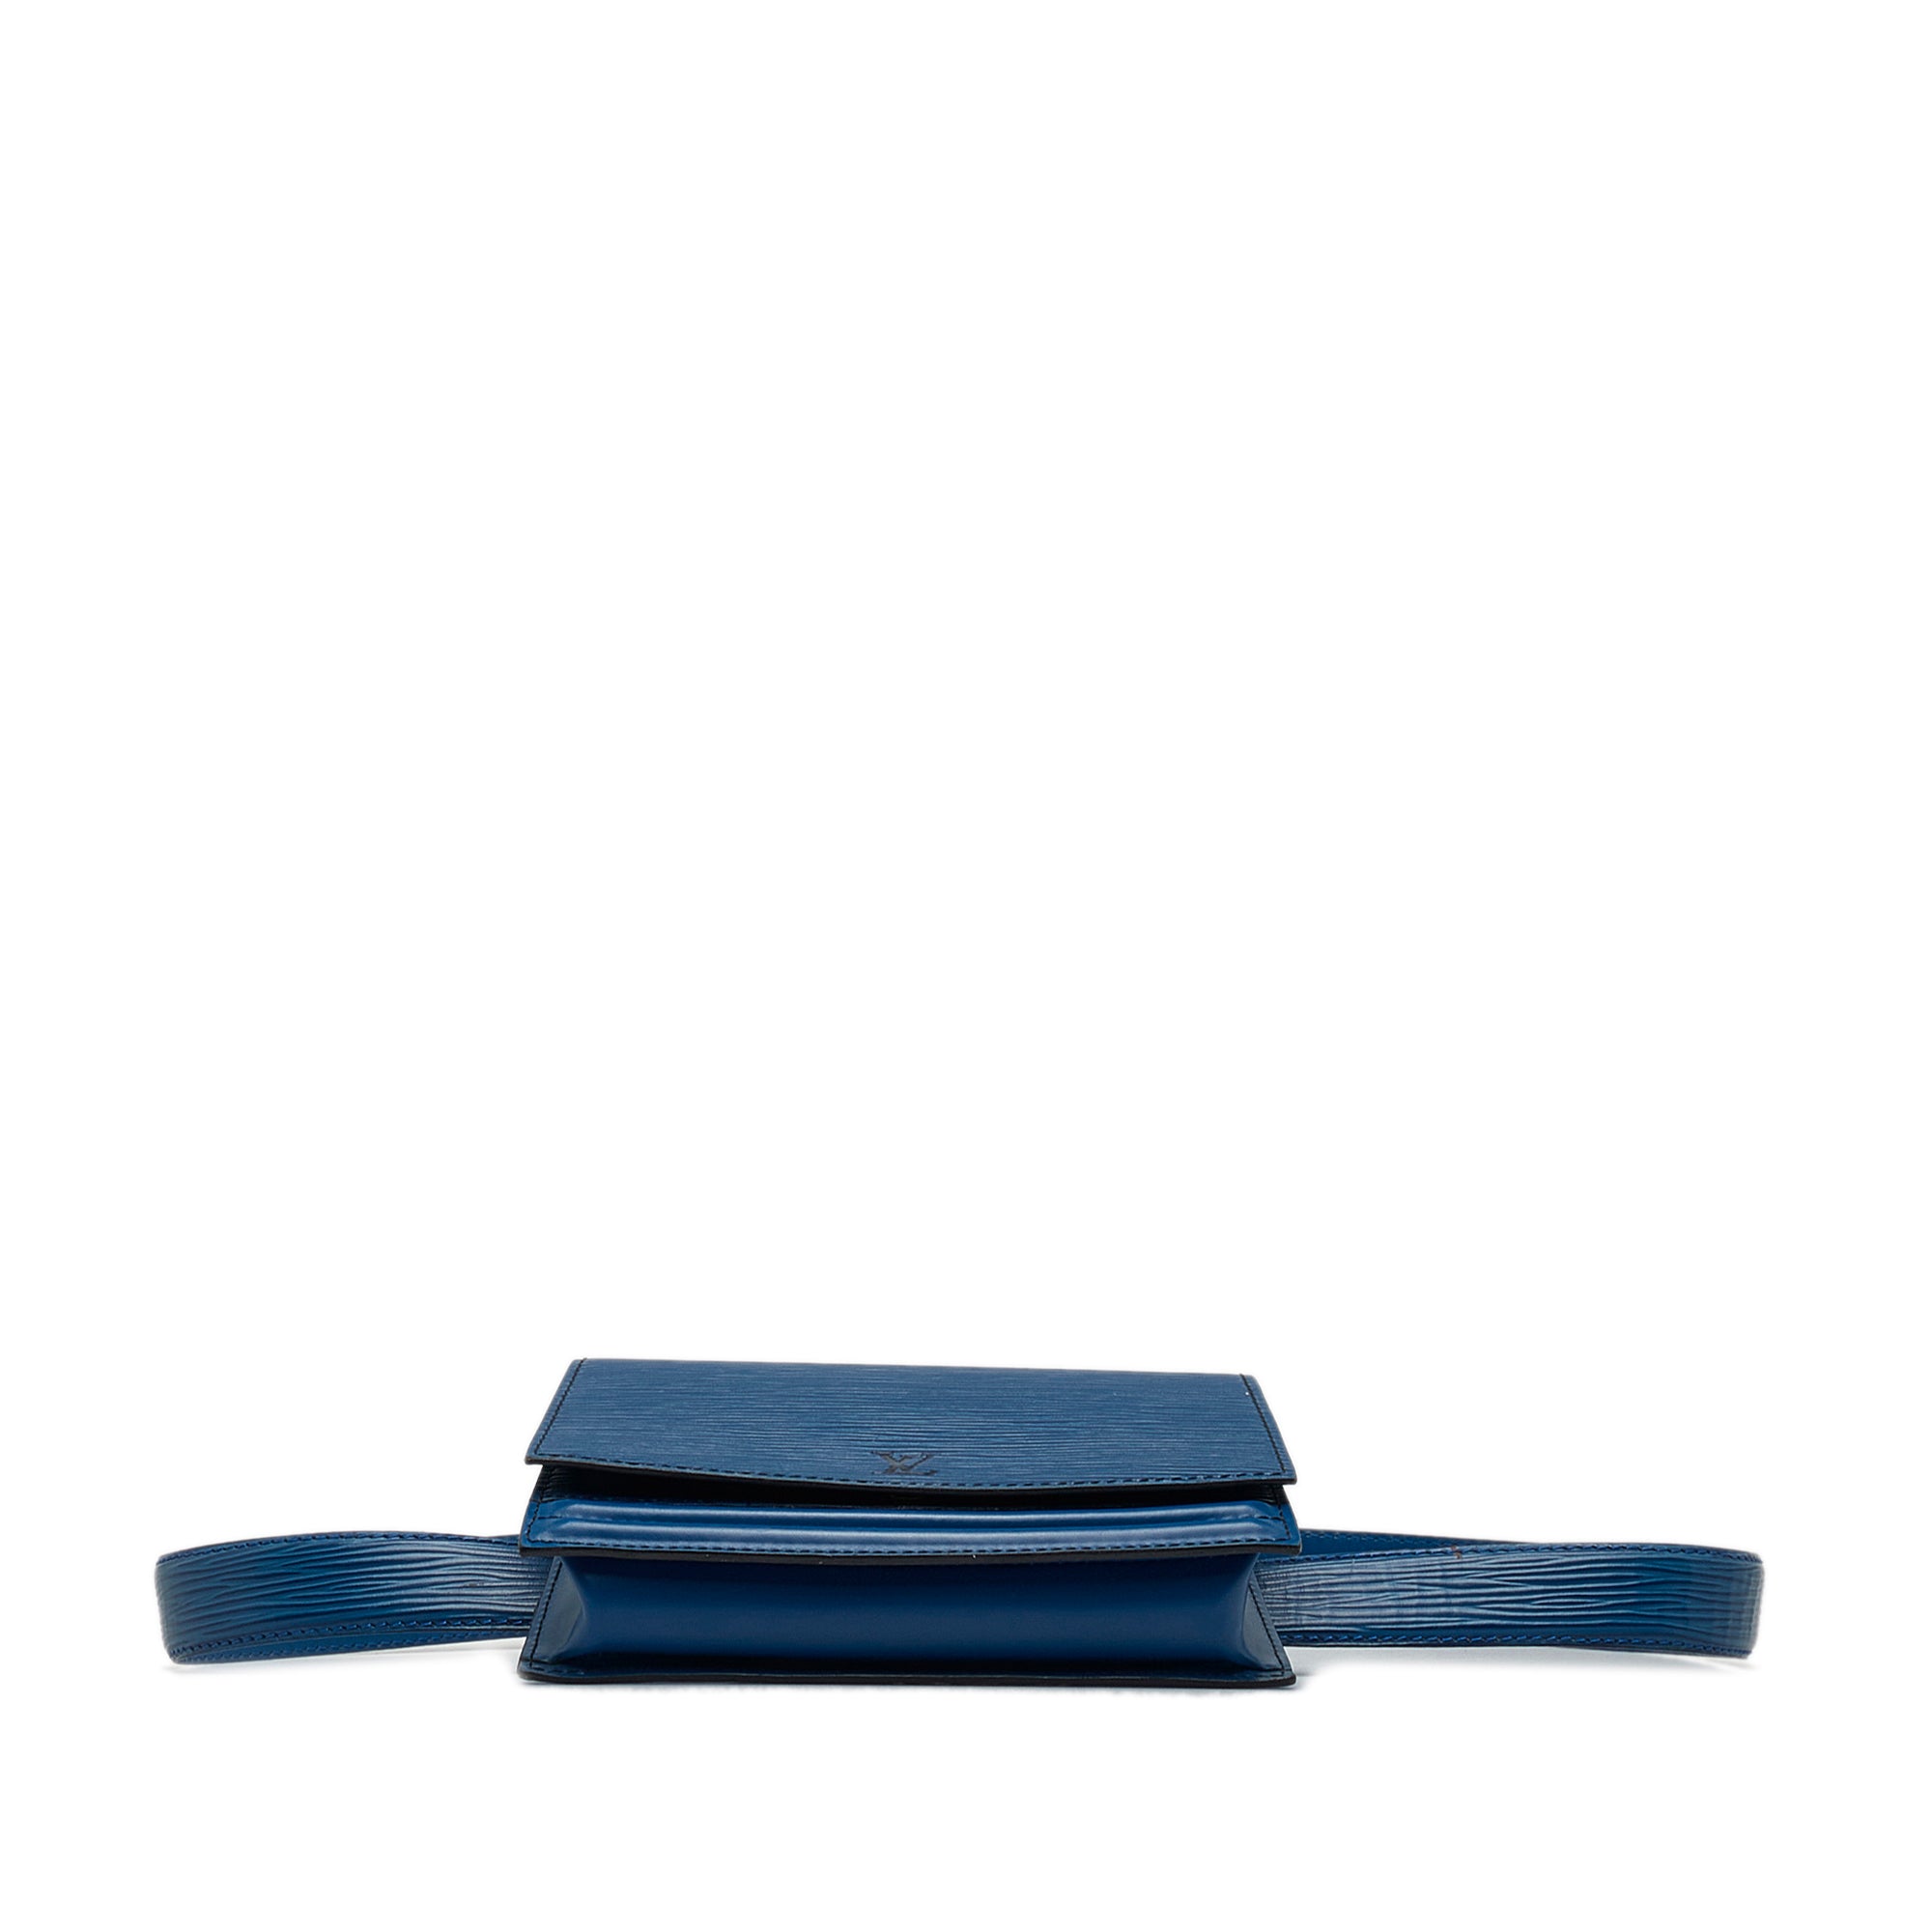 Louis Vuitton belt bag in Tilsitt blue Epi leather at 1stDibs